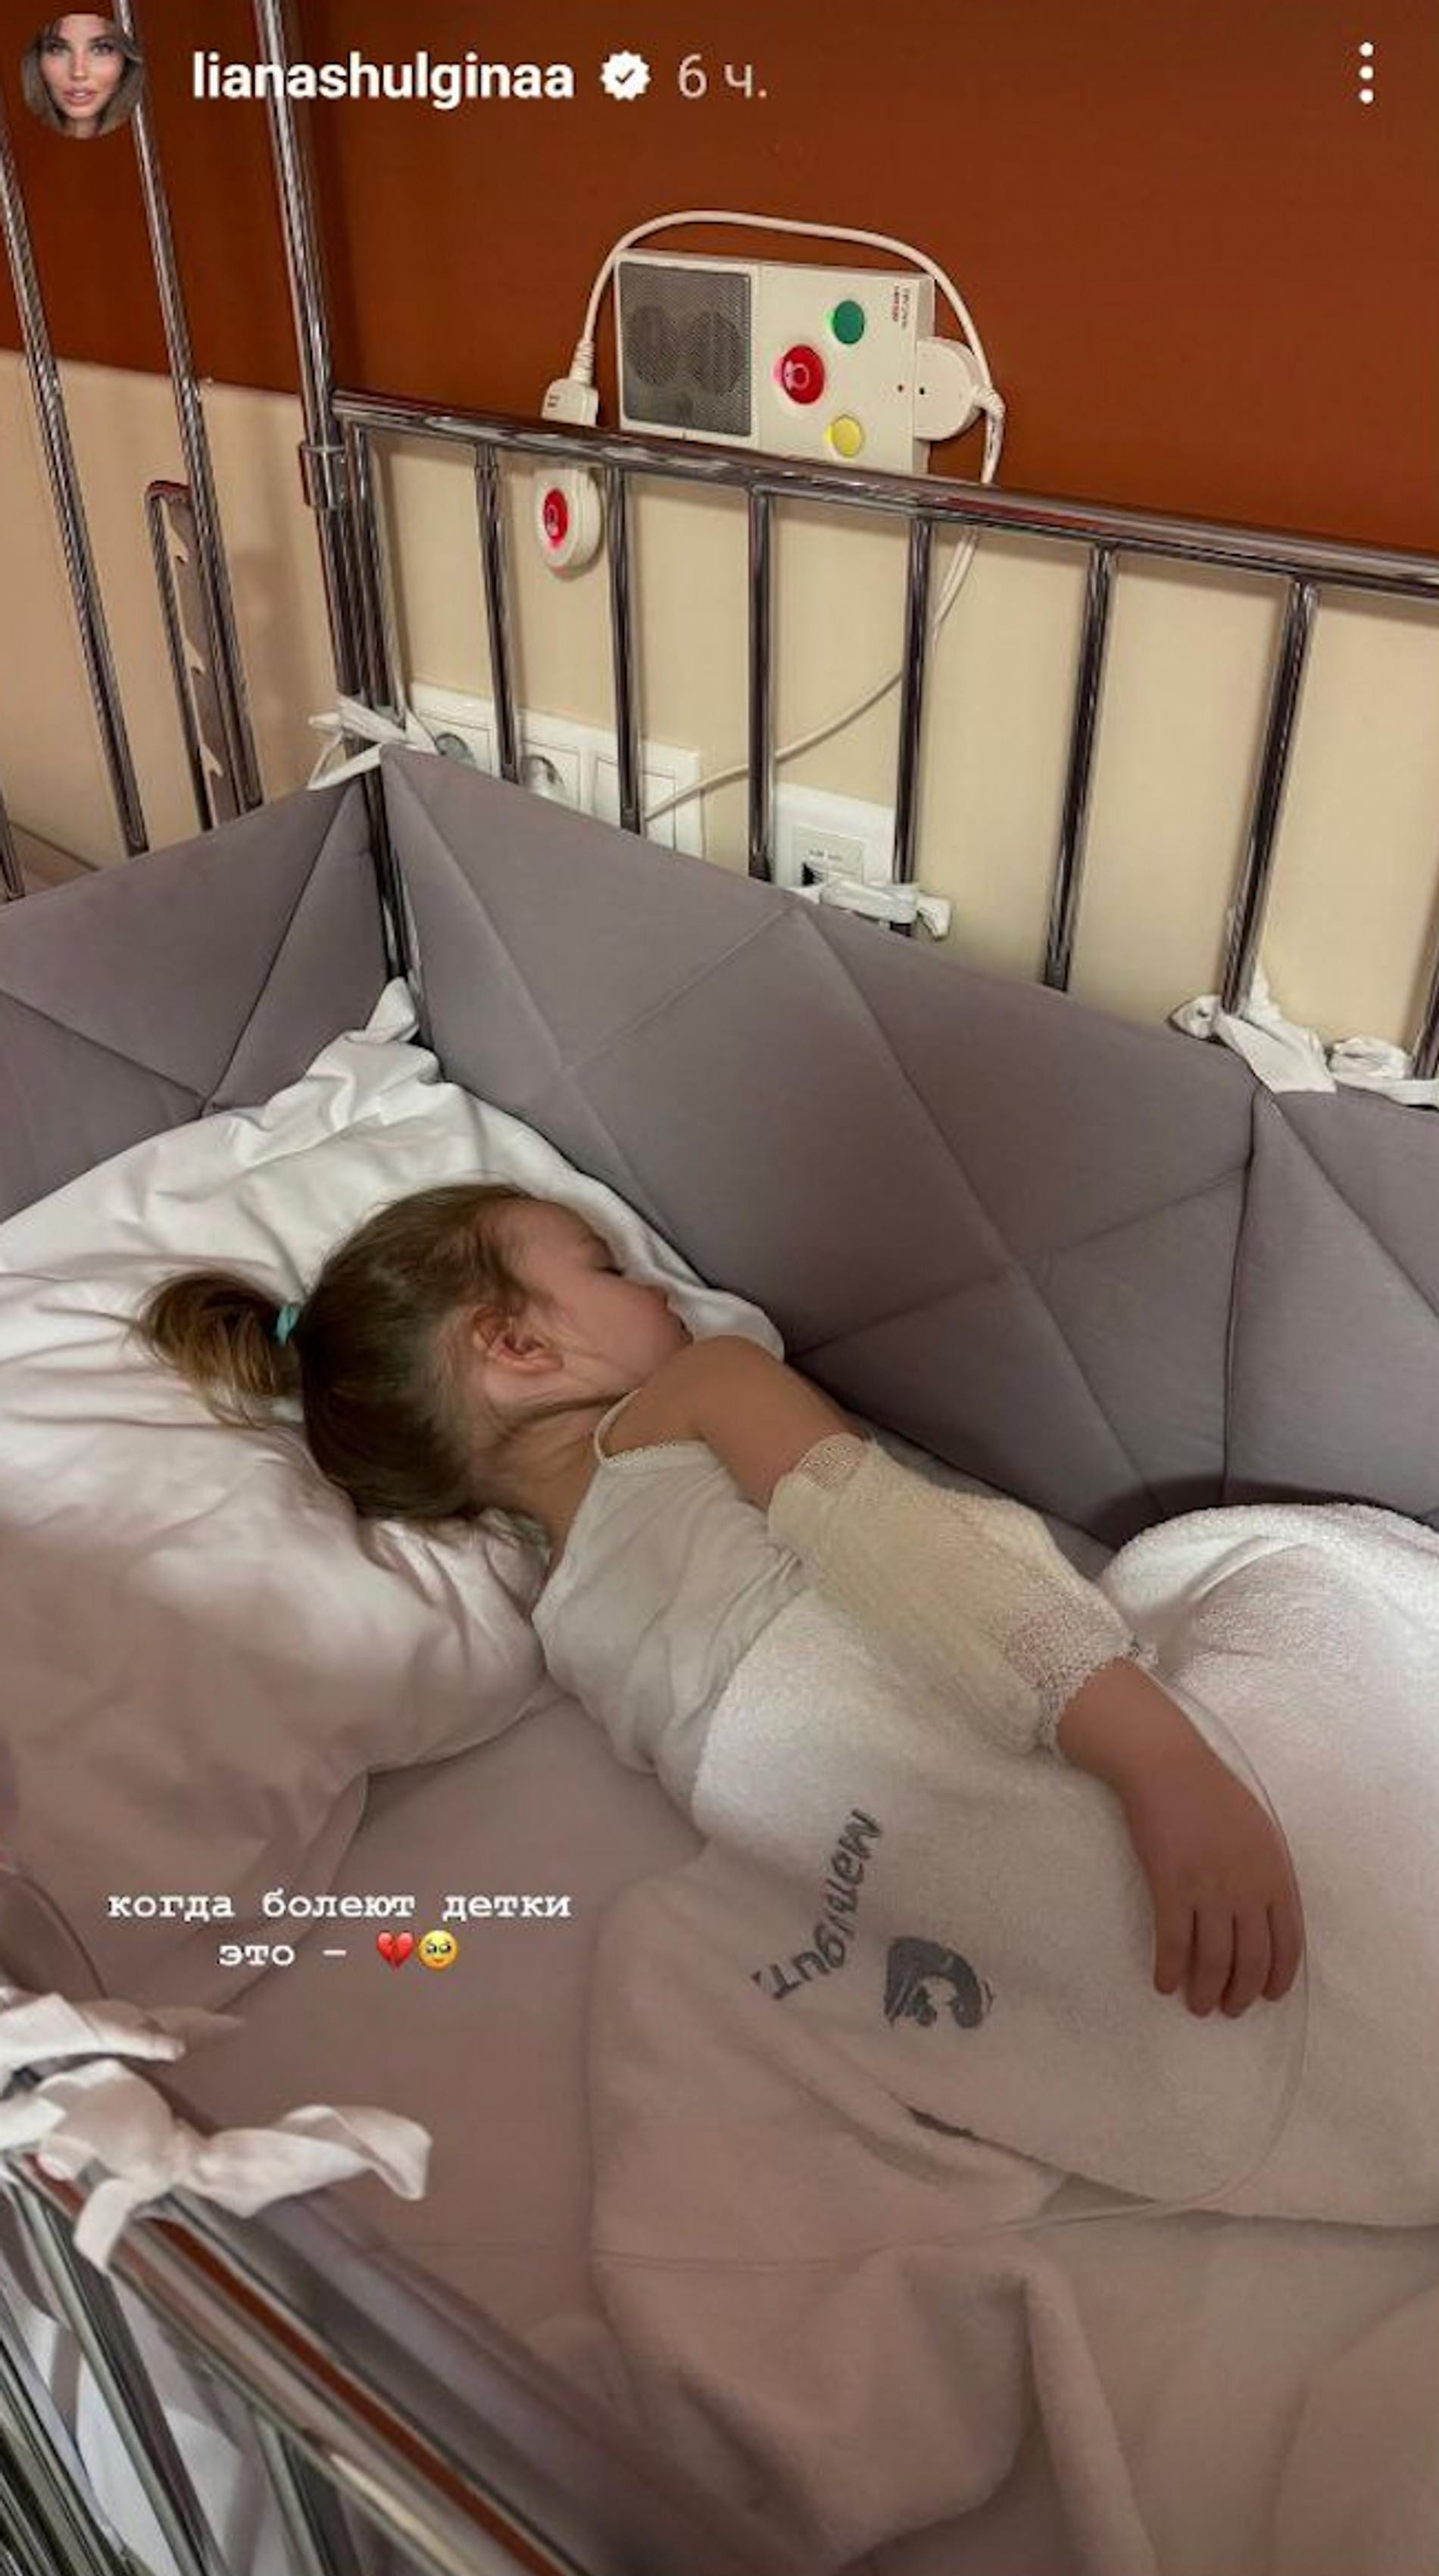 Внучка Валерии Селин в больнице. Фото: Инстаграм (запрещен в РФ) @lianashulginaa